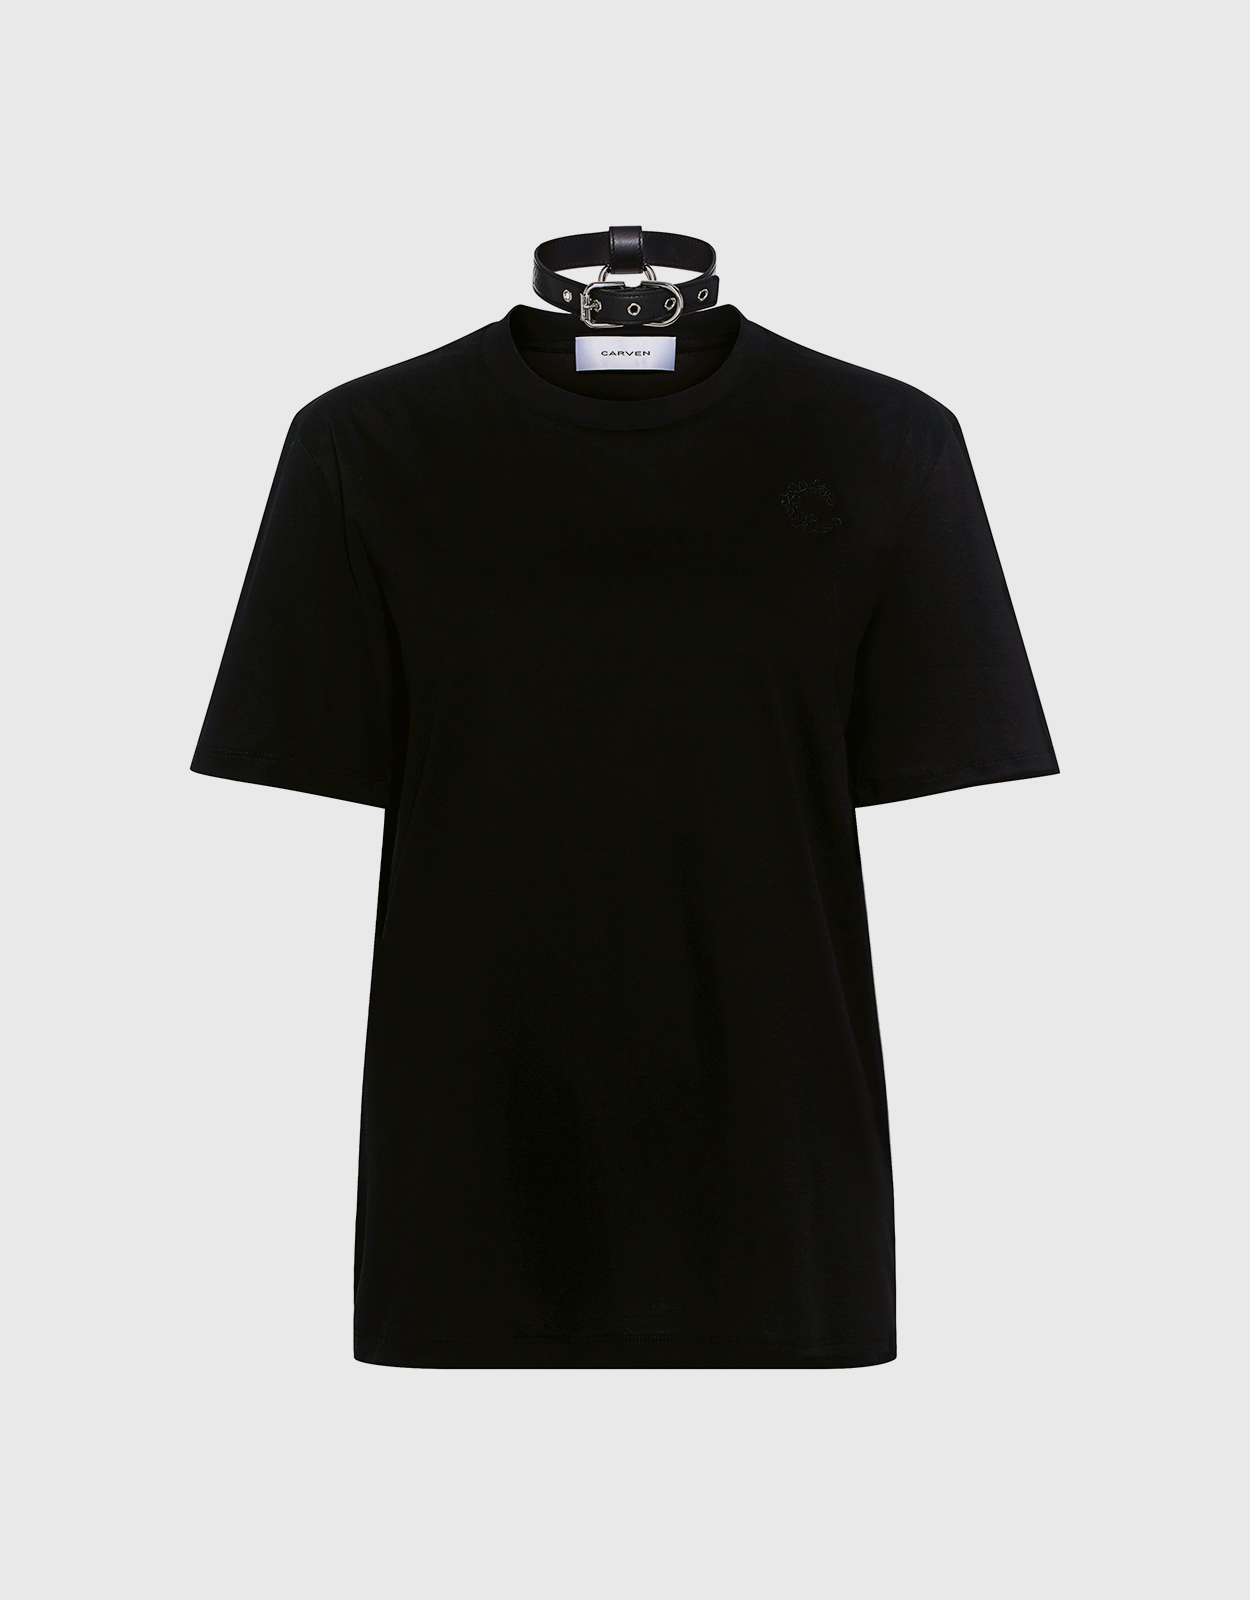 Louis Vuitton Black And Grey Horizontal Stripes Hawaiian Shirt And